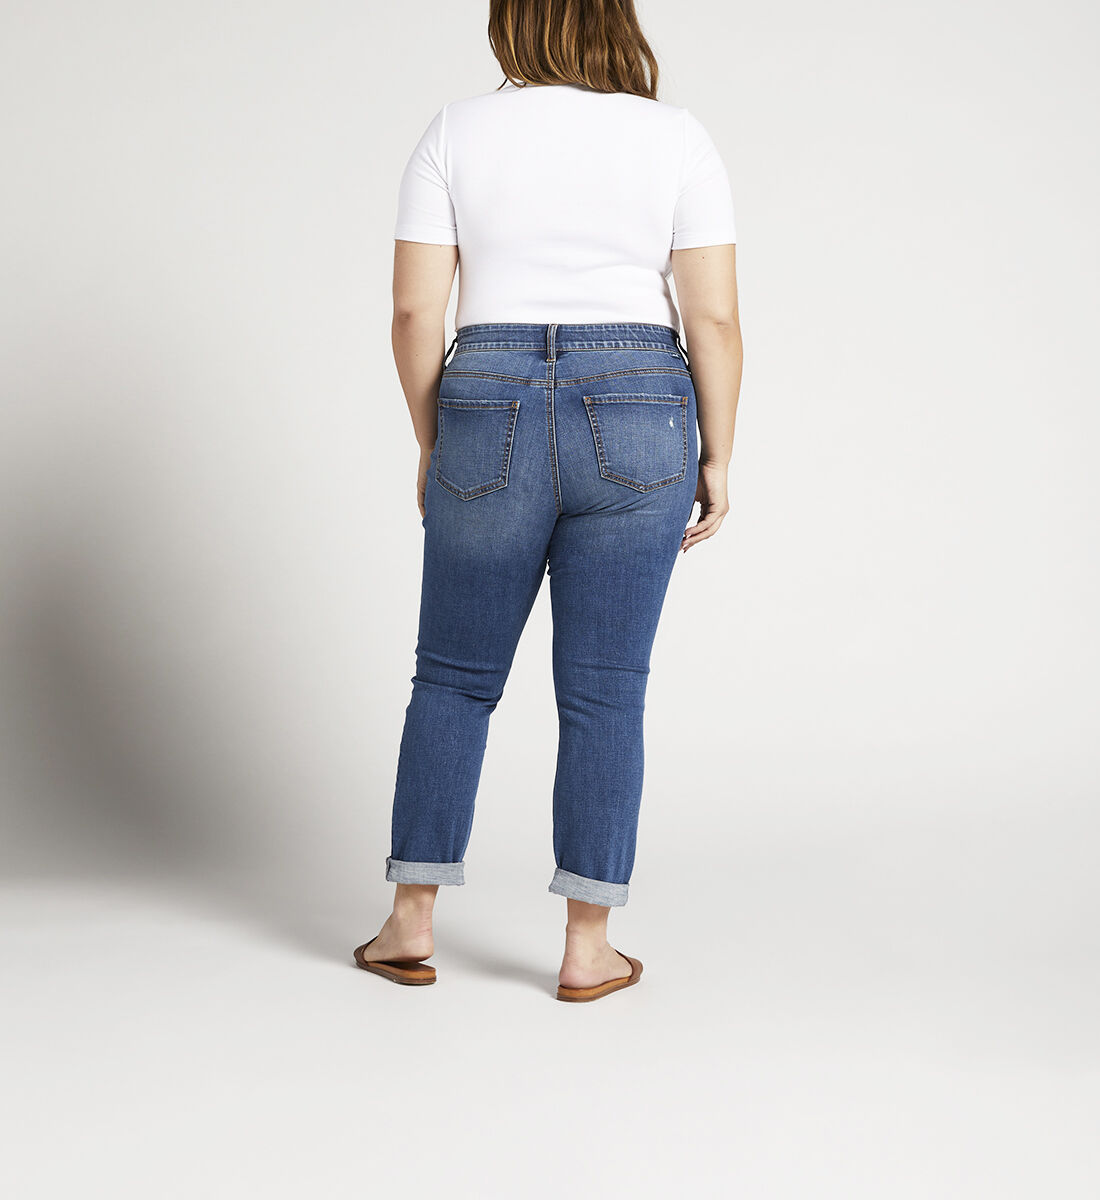 Carter Mid Rise Girlfriend Jeans Plus Size Back